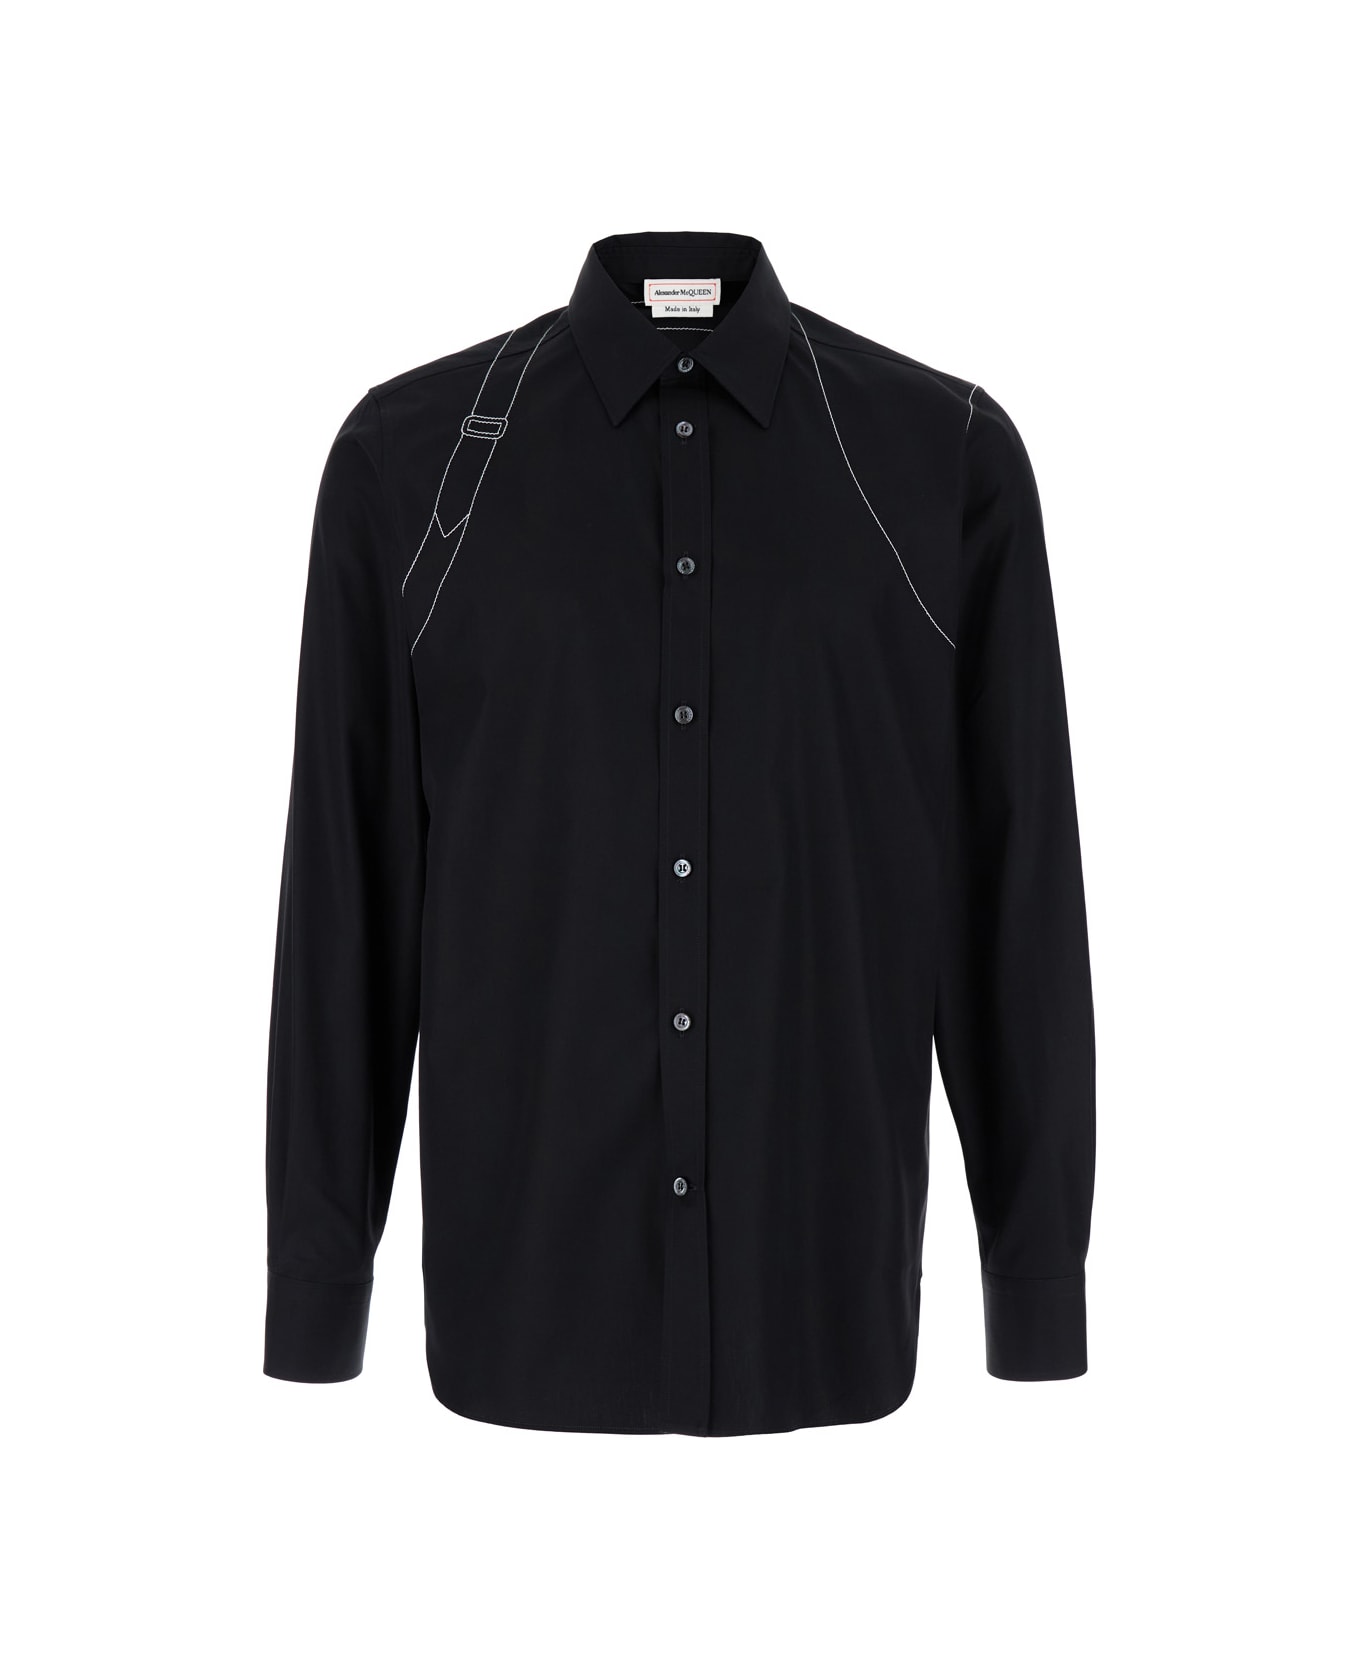 Alexander McQueen Black Shirt With White Stitchings In Cotton Man - Black